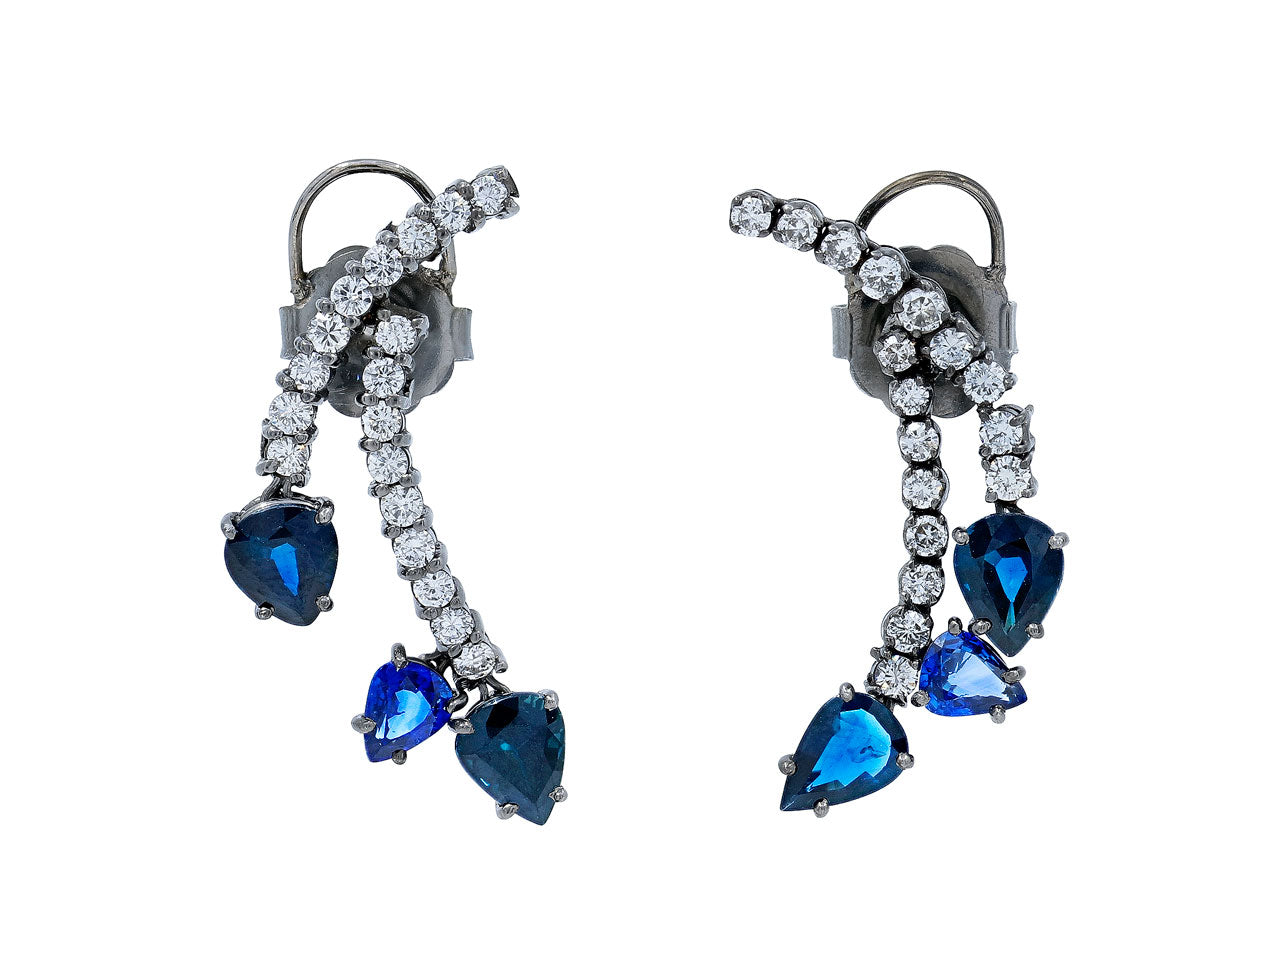 Beladora Bespoke Sapphire and Diamond Earrings in Blackened 18K Gold